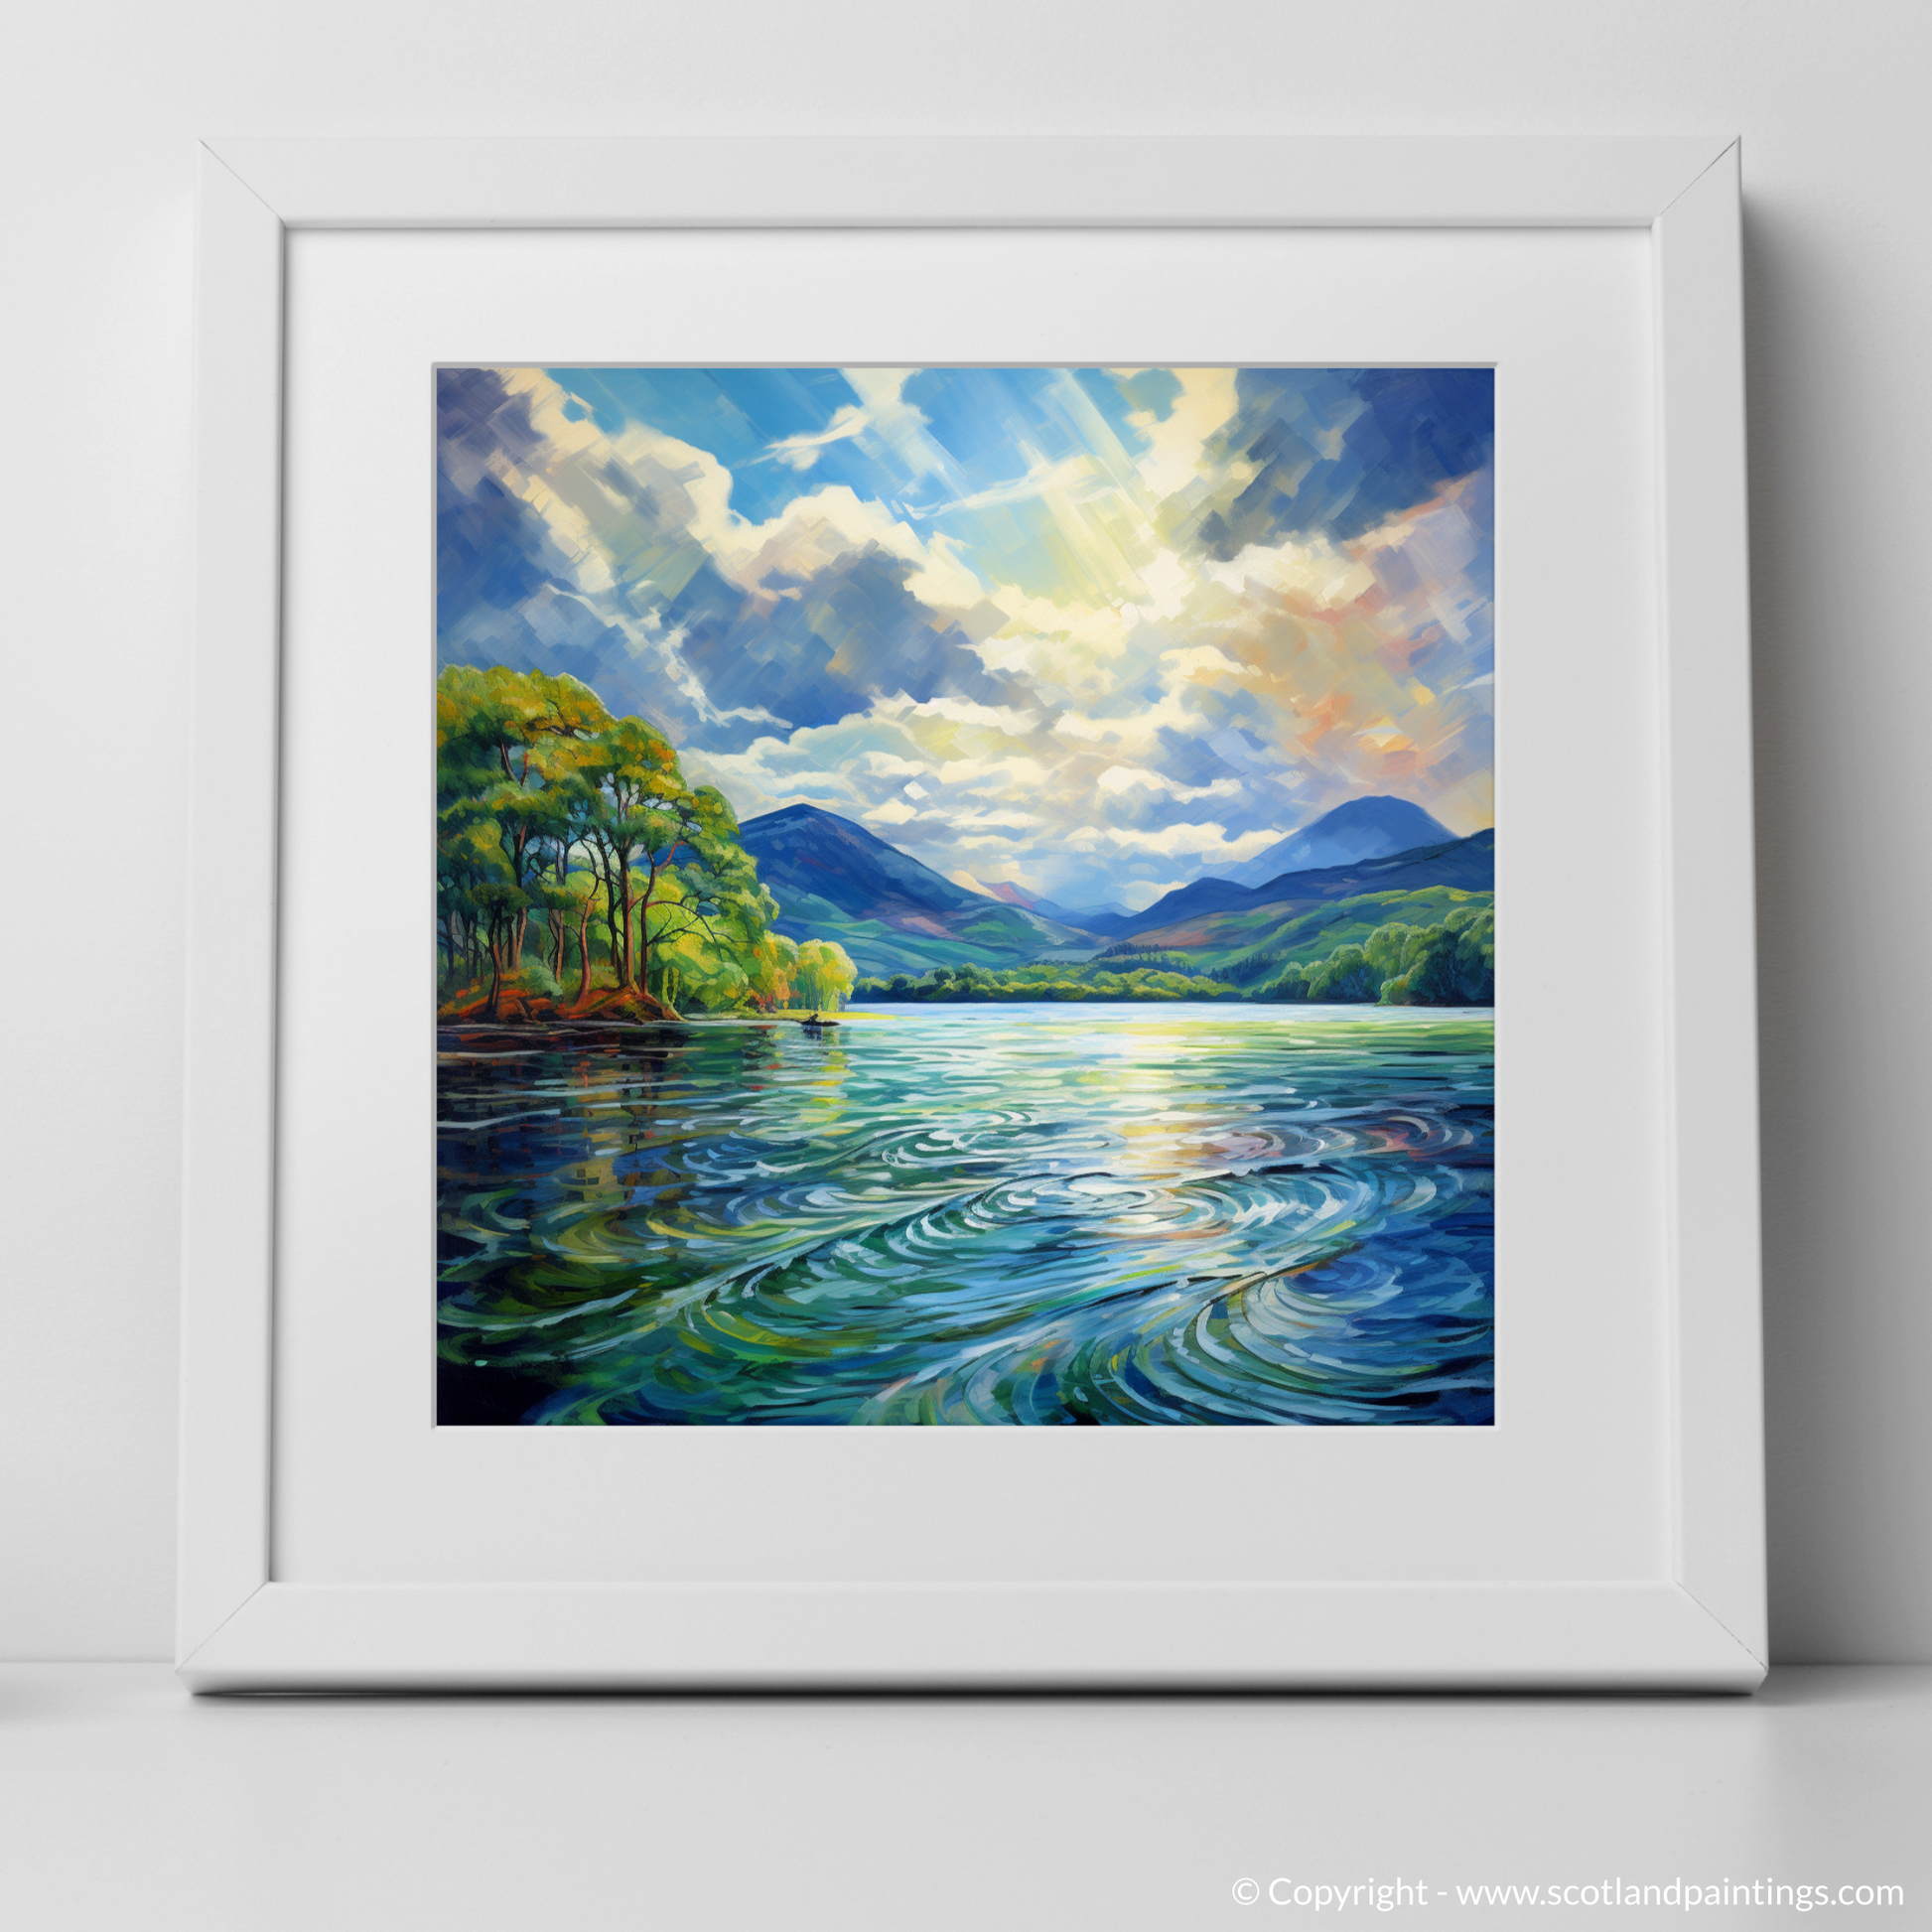 Art Print of Loch Lomond with a white frame